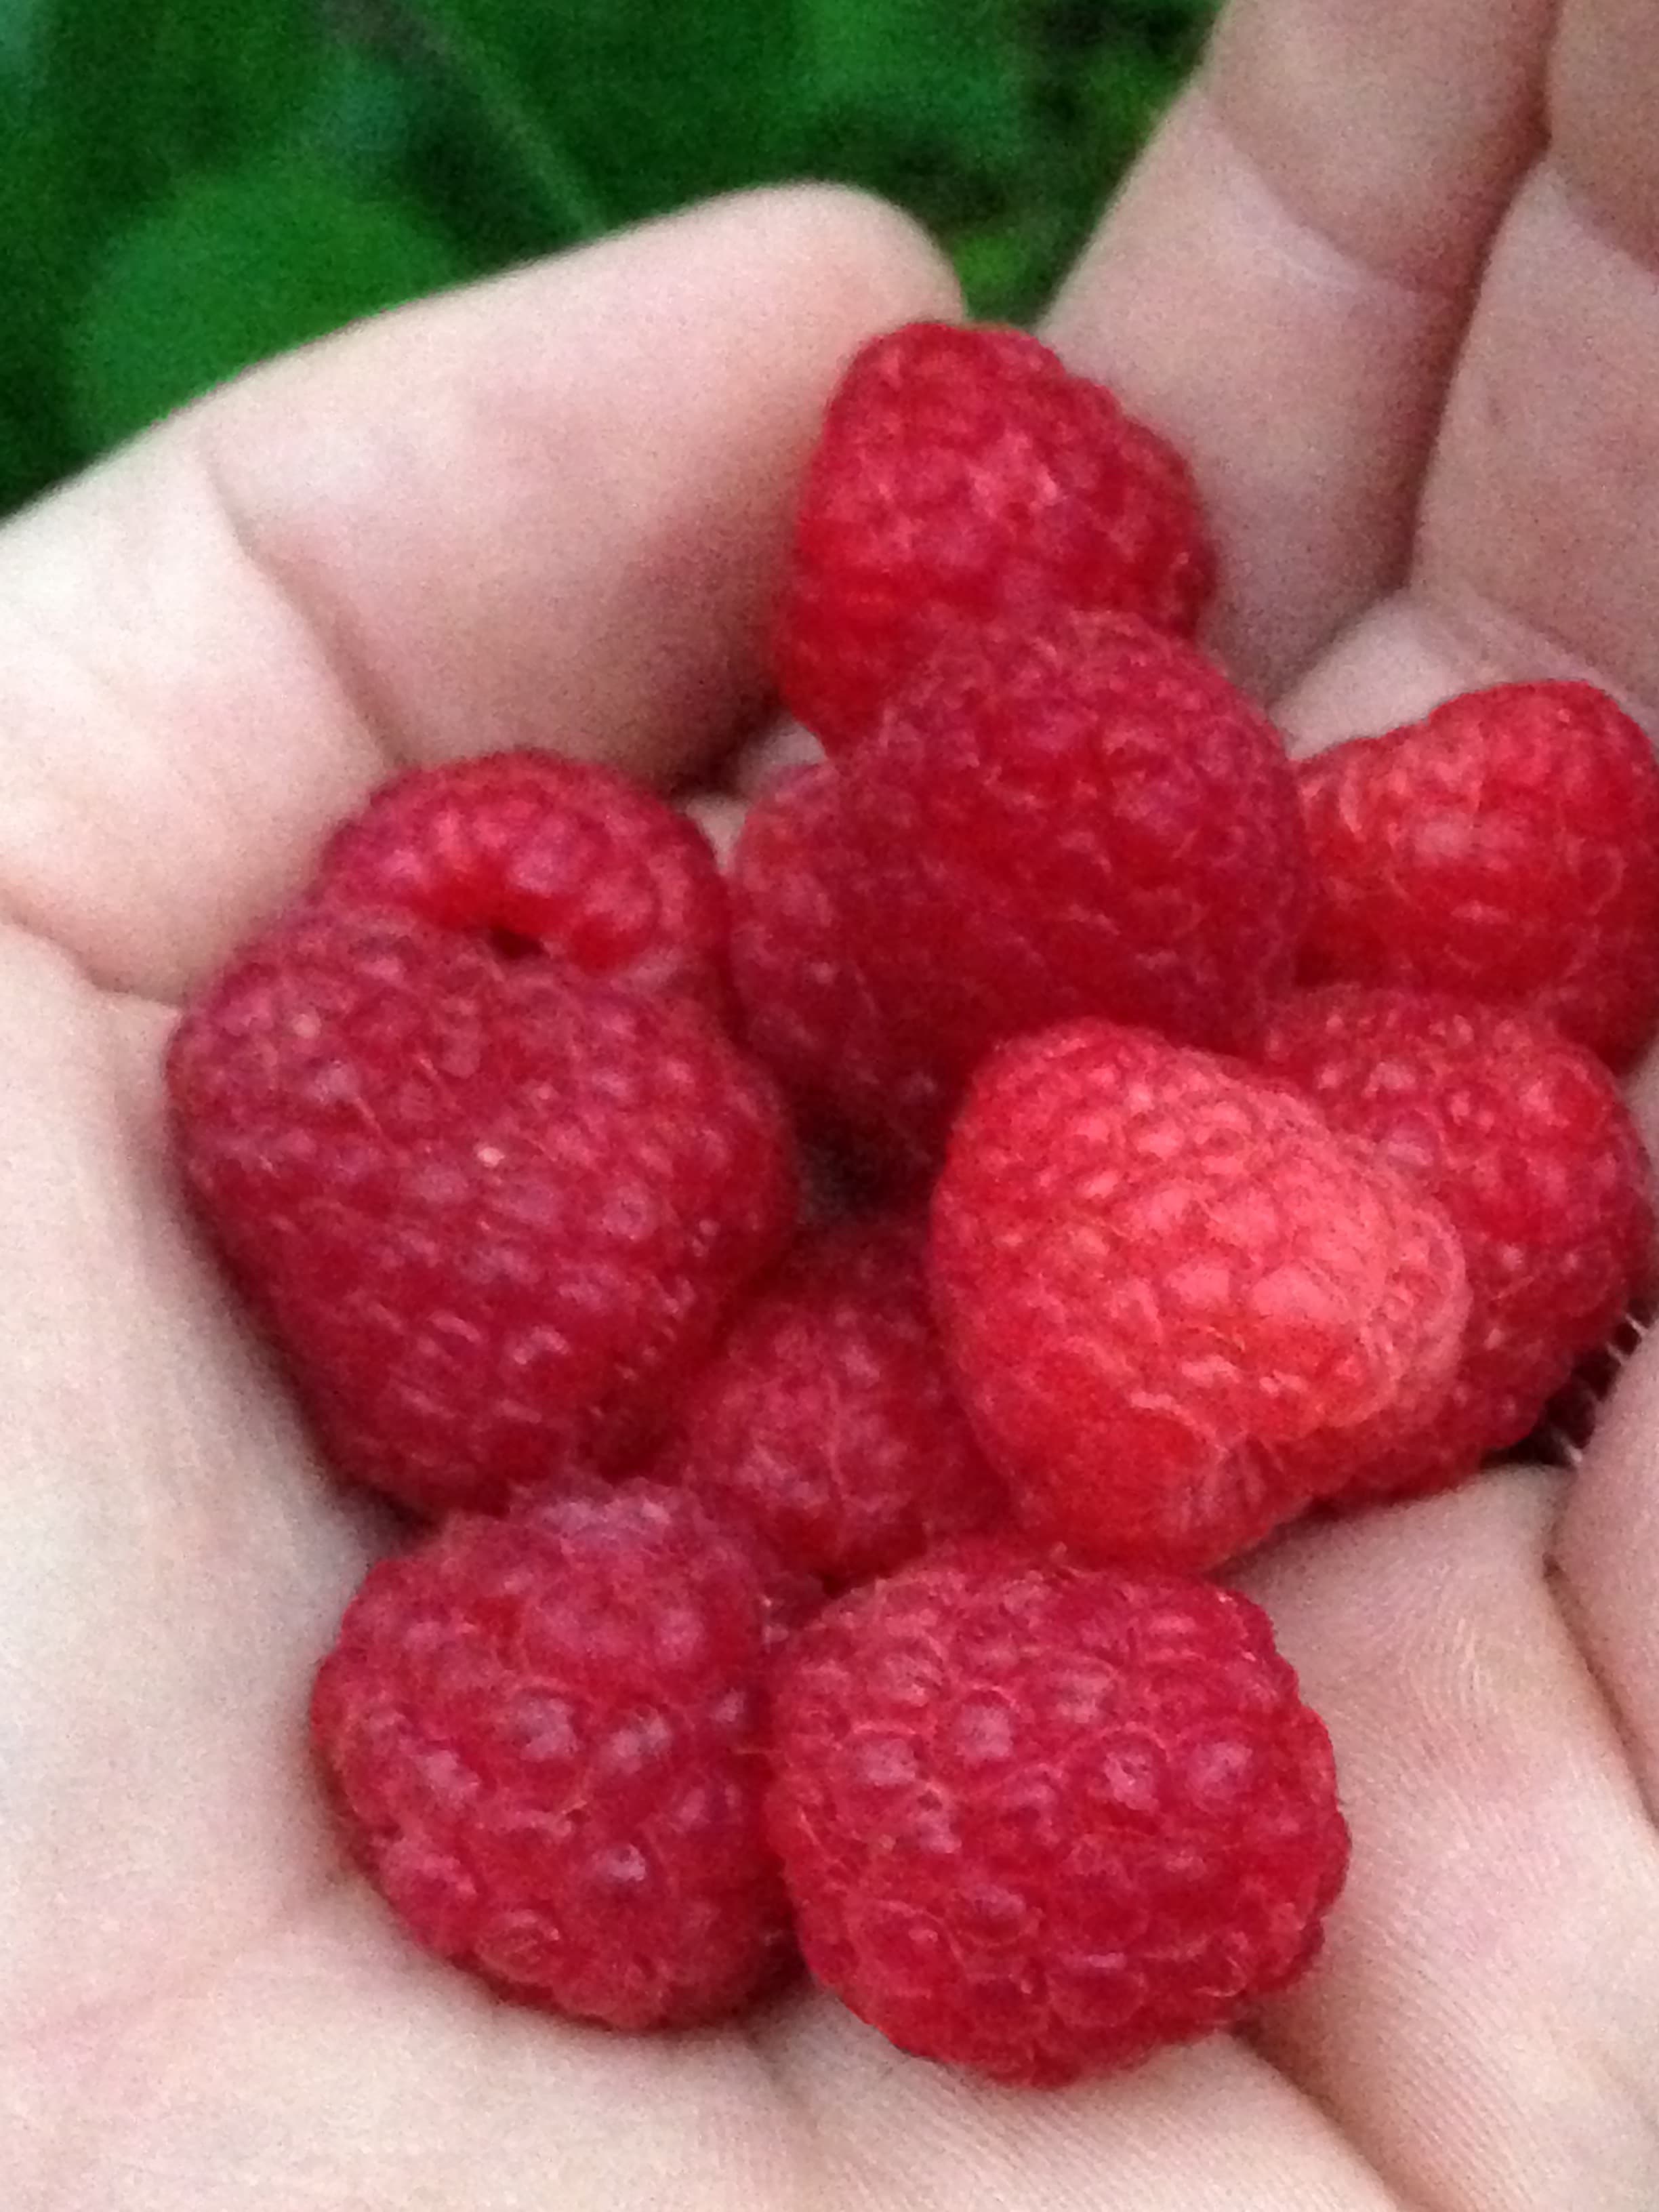 a hand full of bright red organic raspberries.